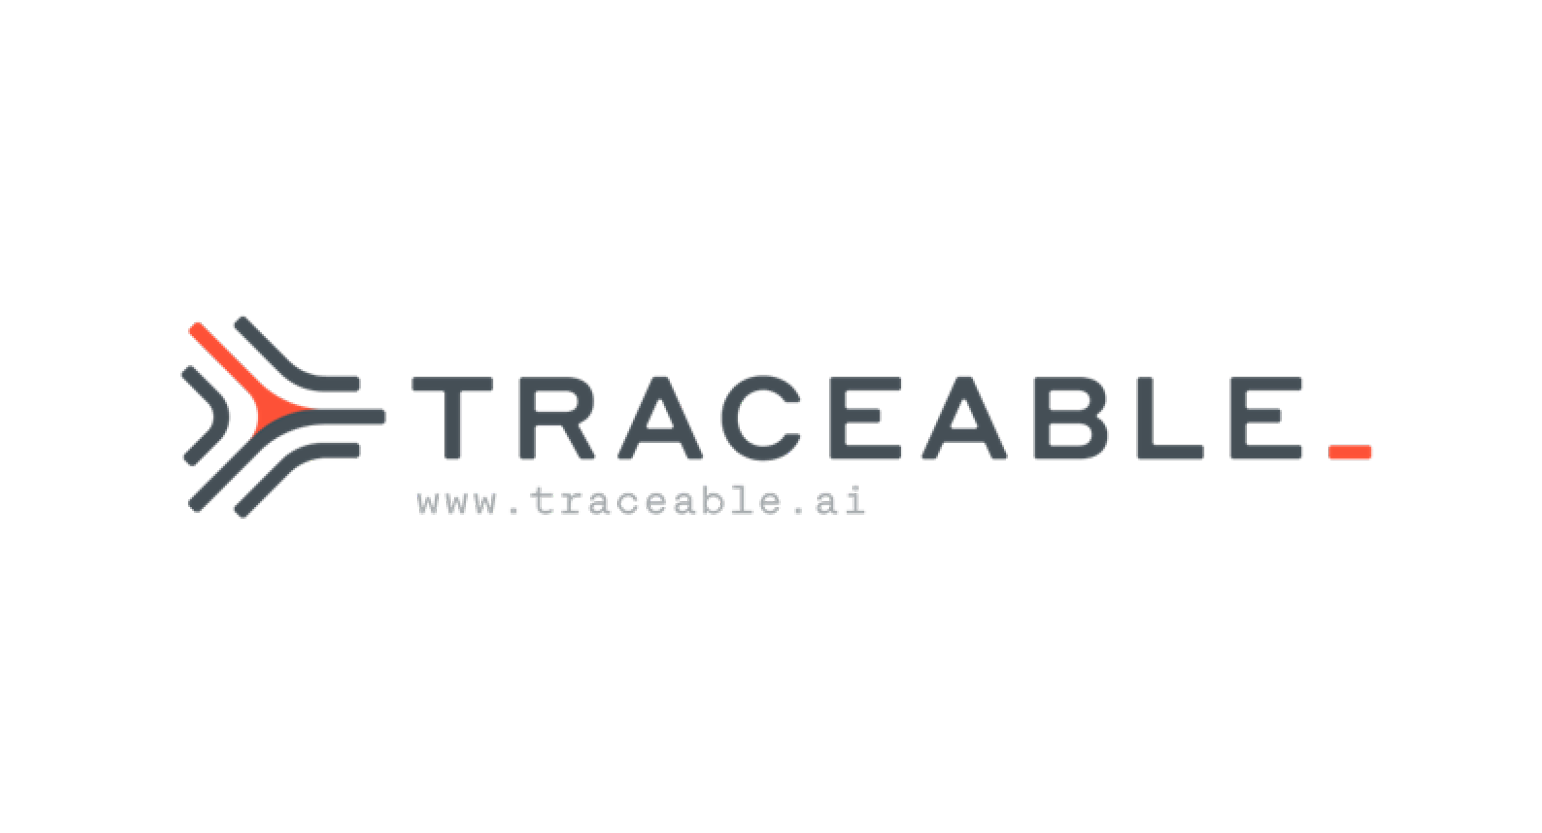 Traceable logo